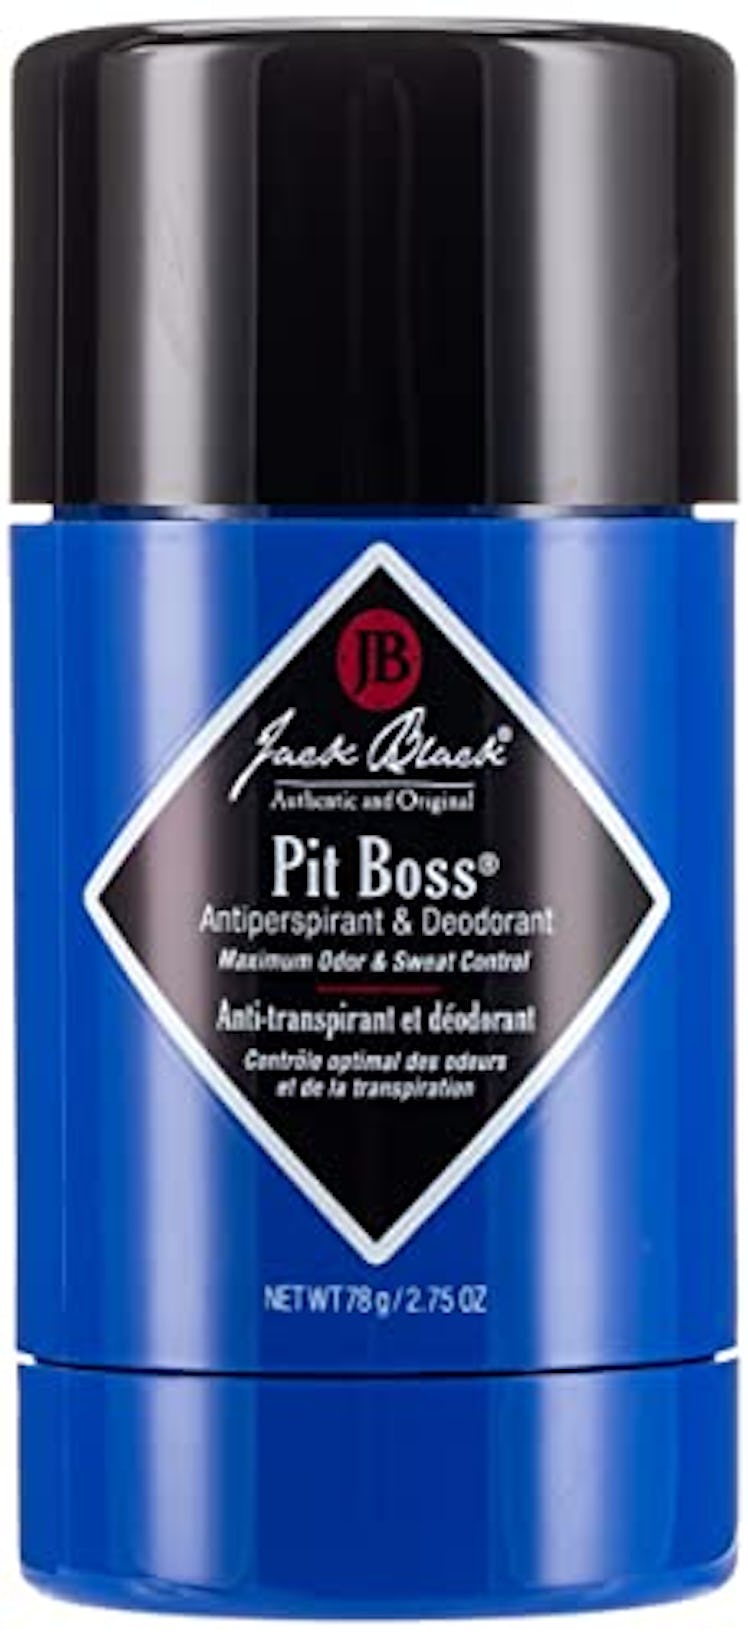 Pit Boss Antiperspirant & Deodorant by Jack Black